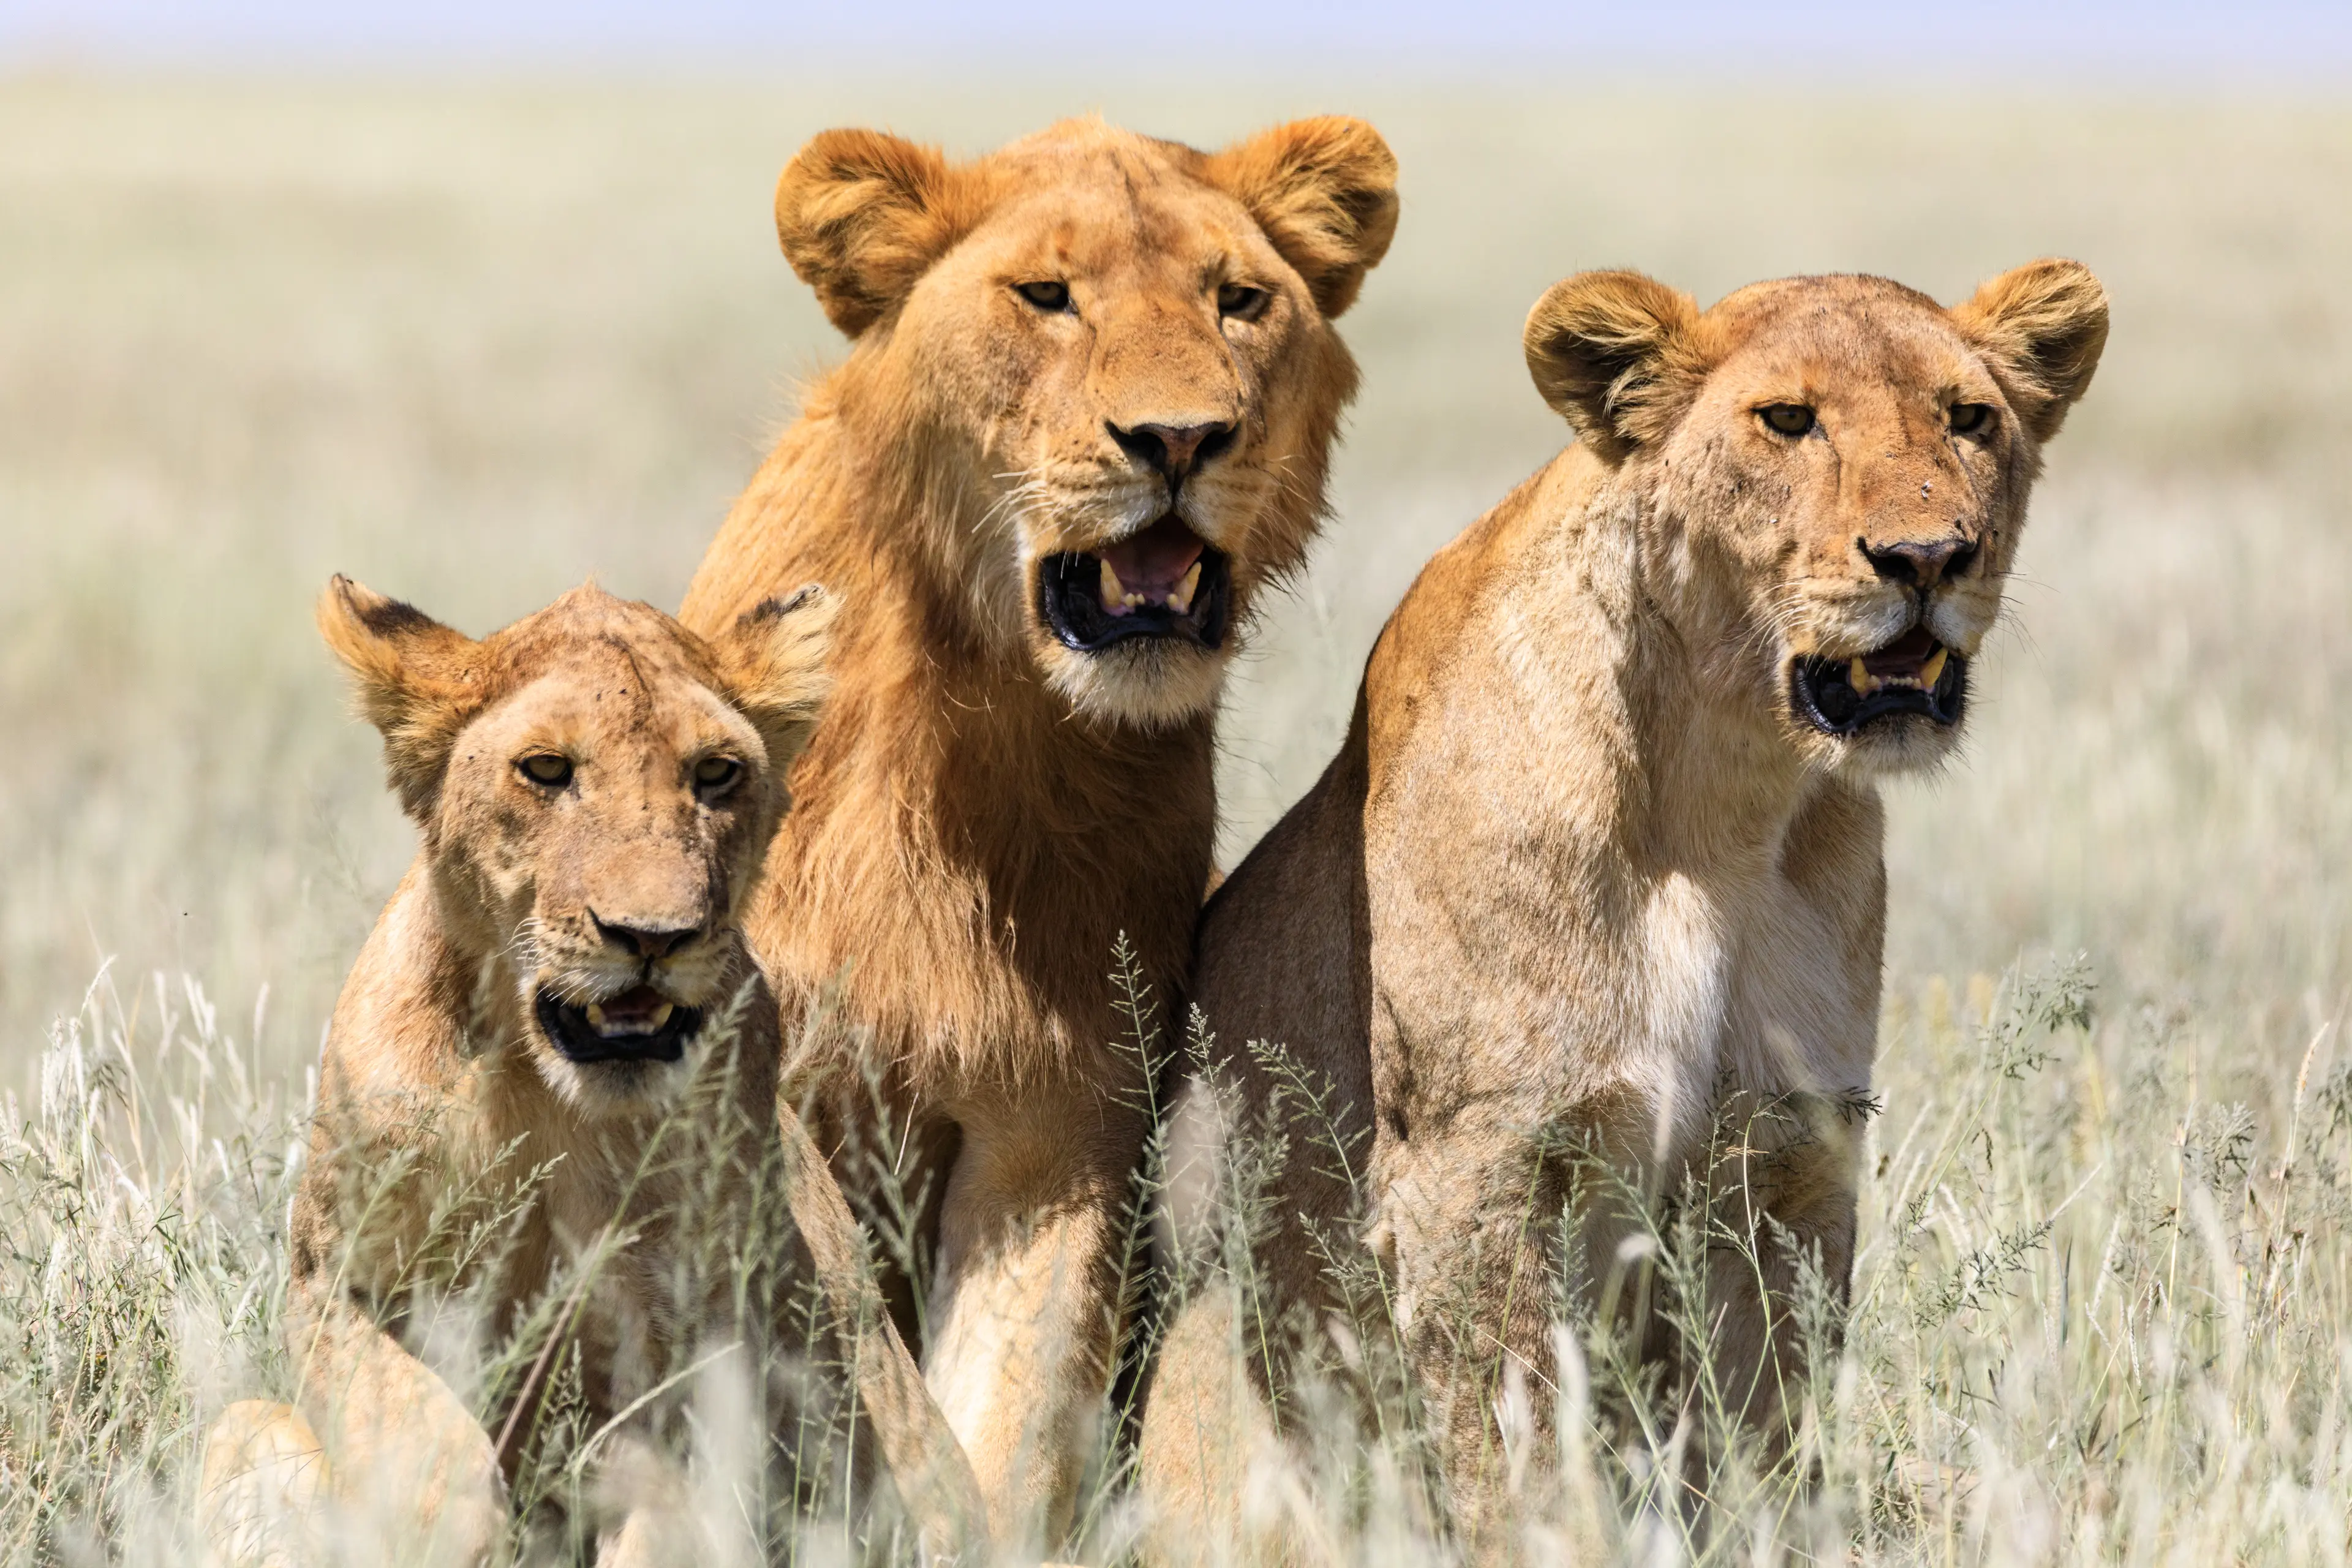 1-Day Solo Adventure: Local's Guide to Serengeti Park